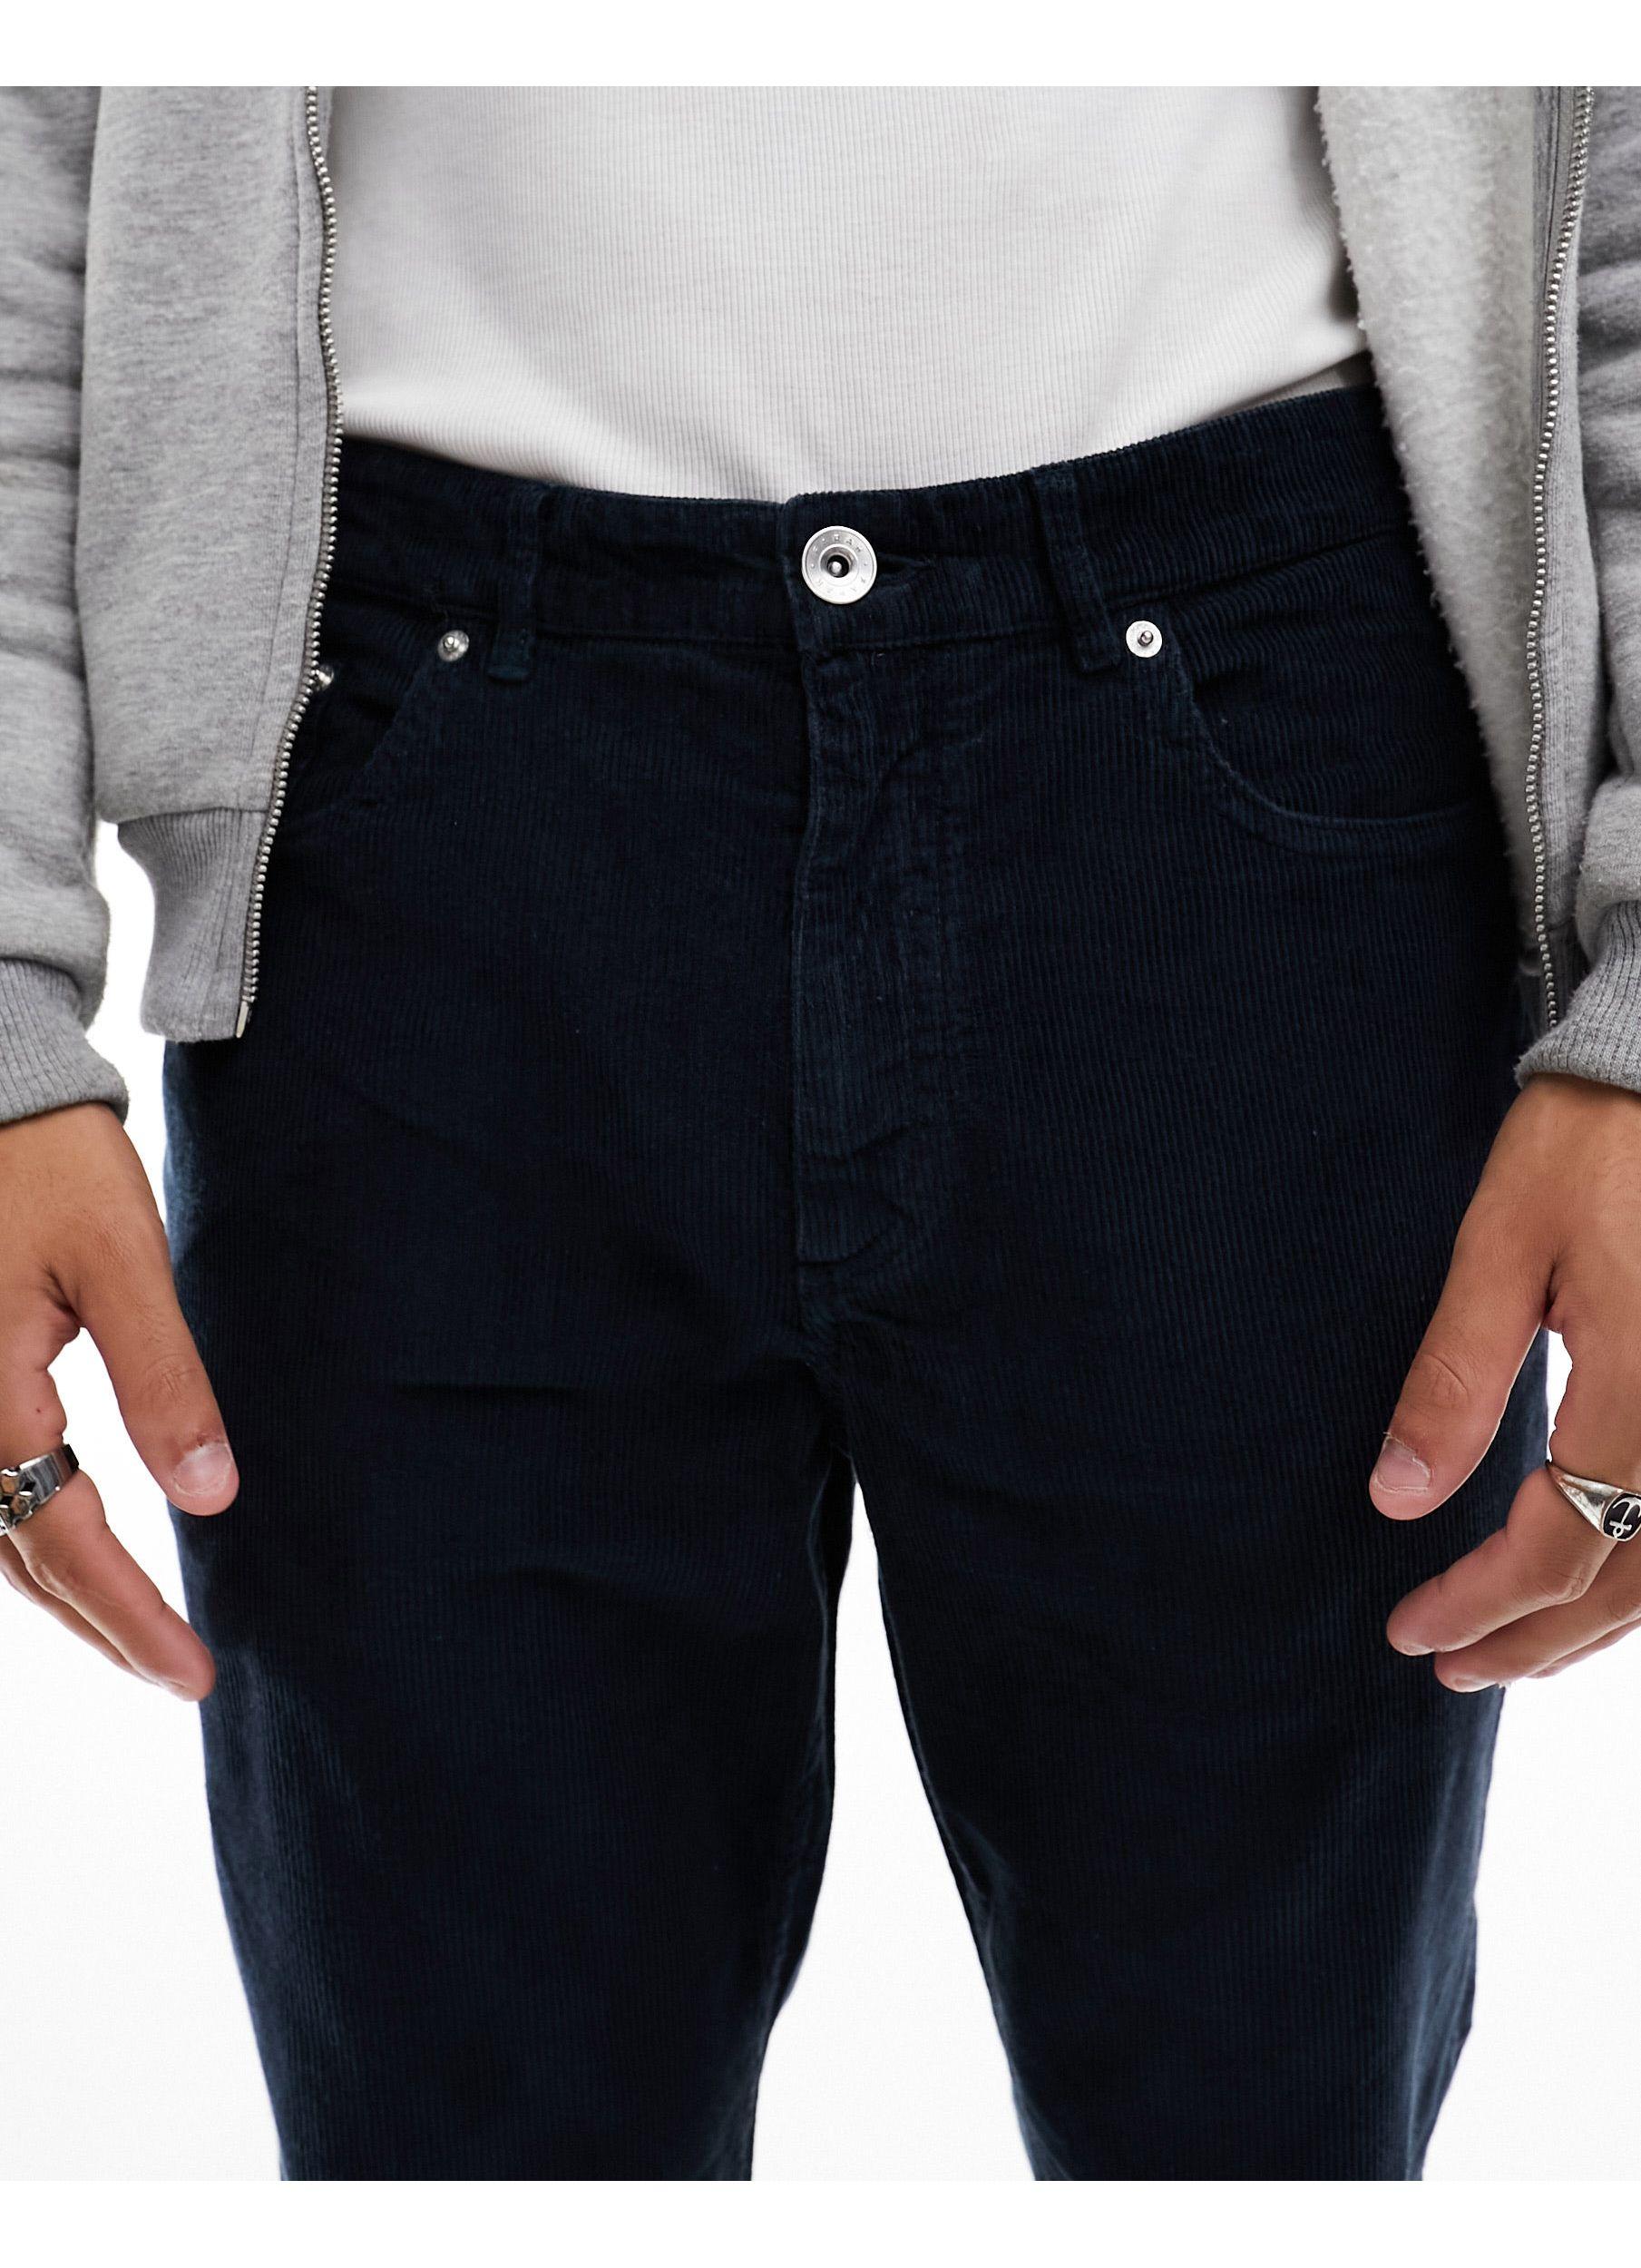 Corduroy Slim Trousers (Men's/Farah/30”), Men's Fashion, Bottoms, Jeans on  Carousell